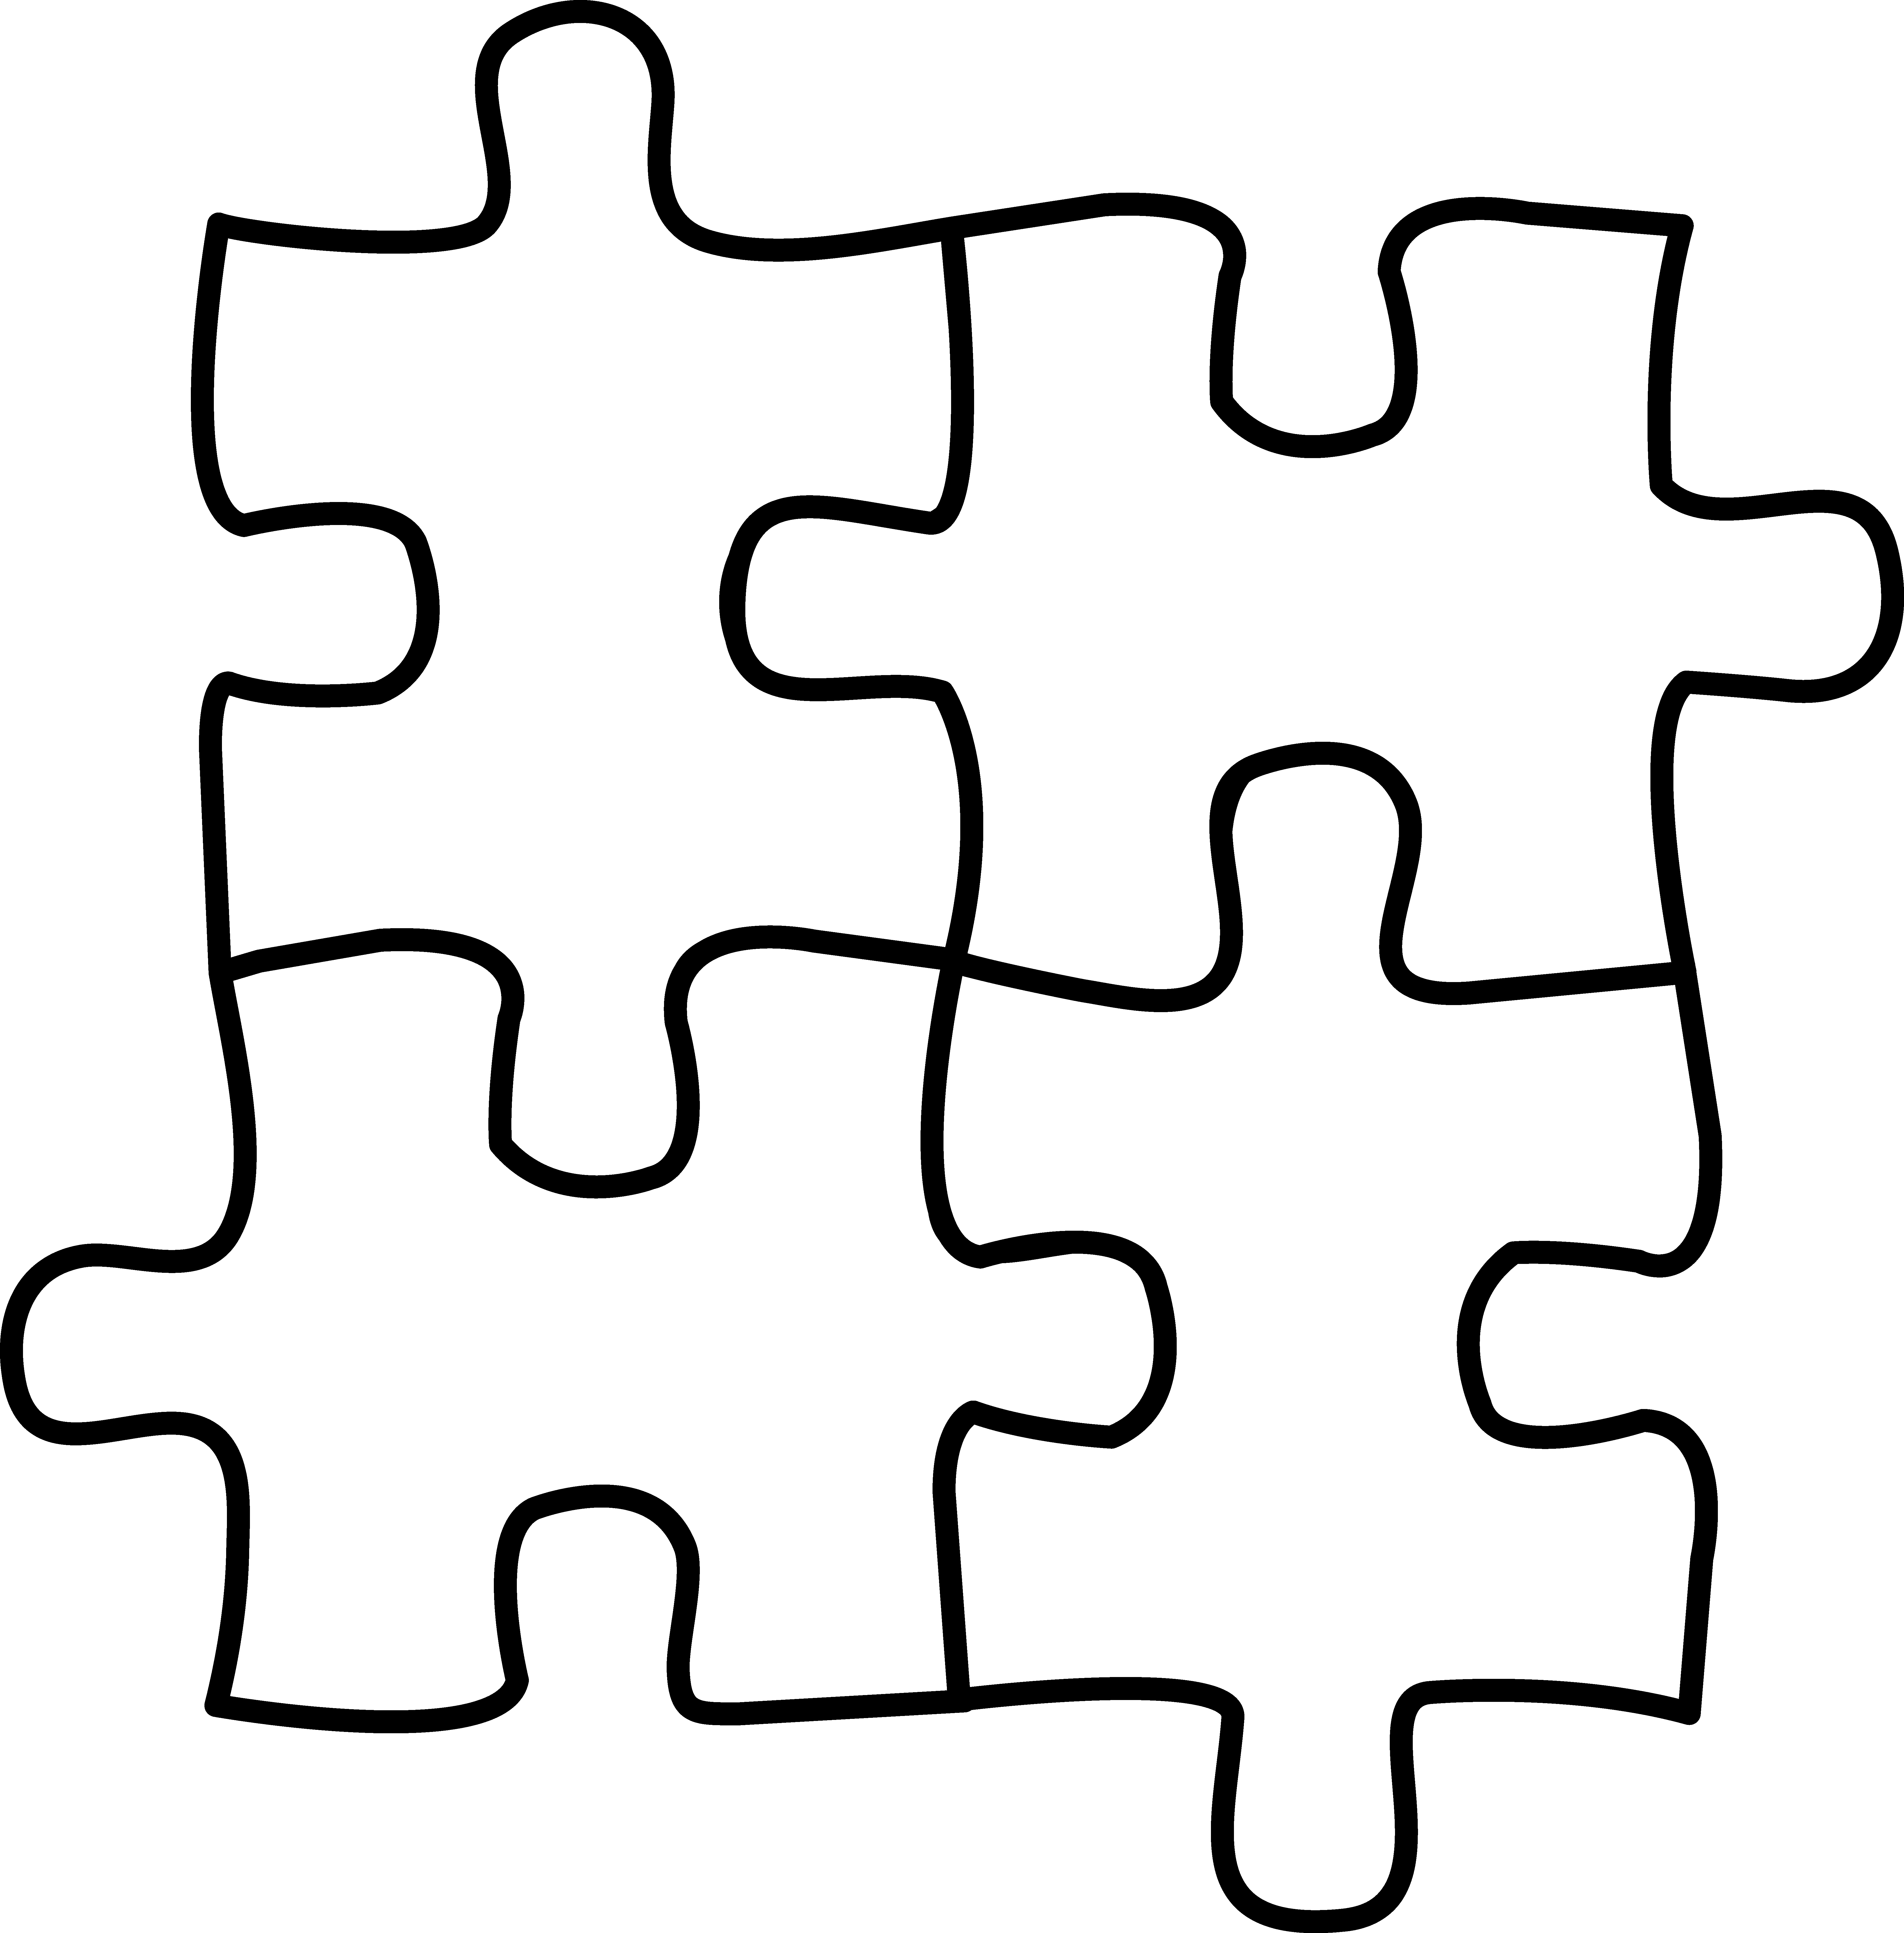 Puzzle Piece Graphic